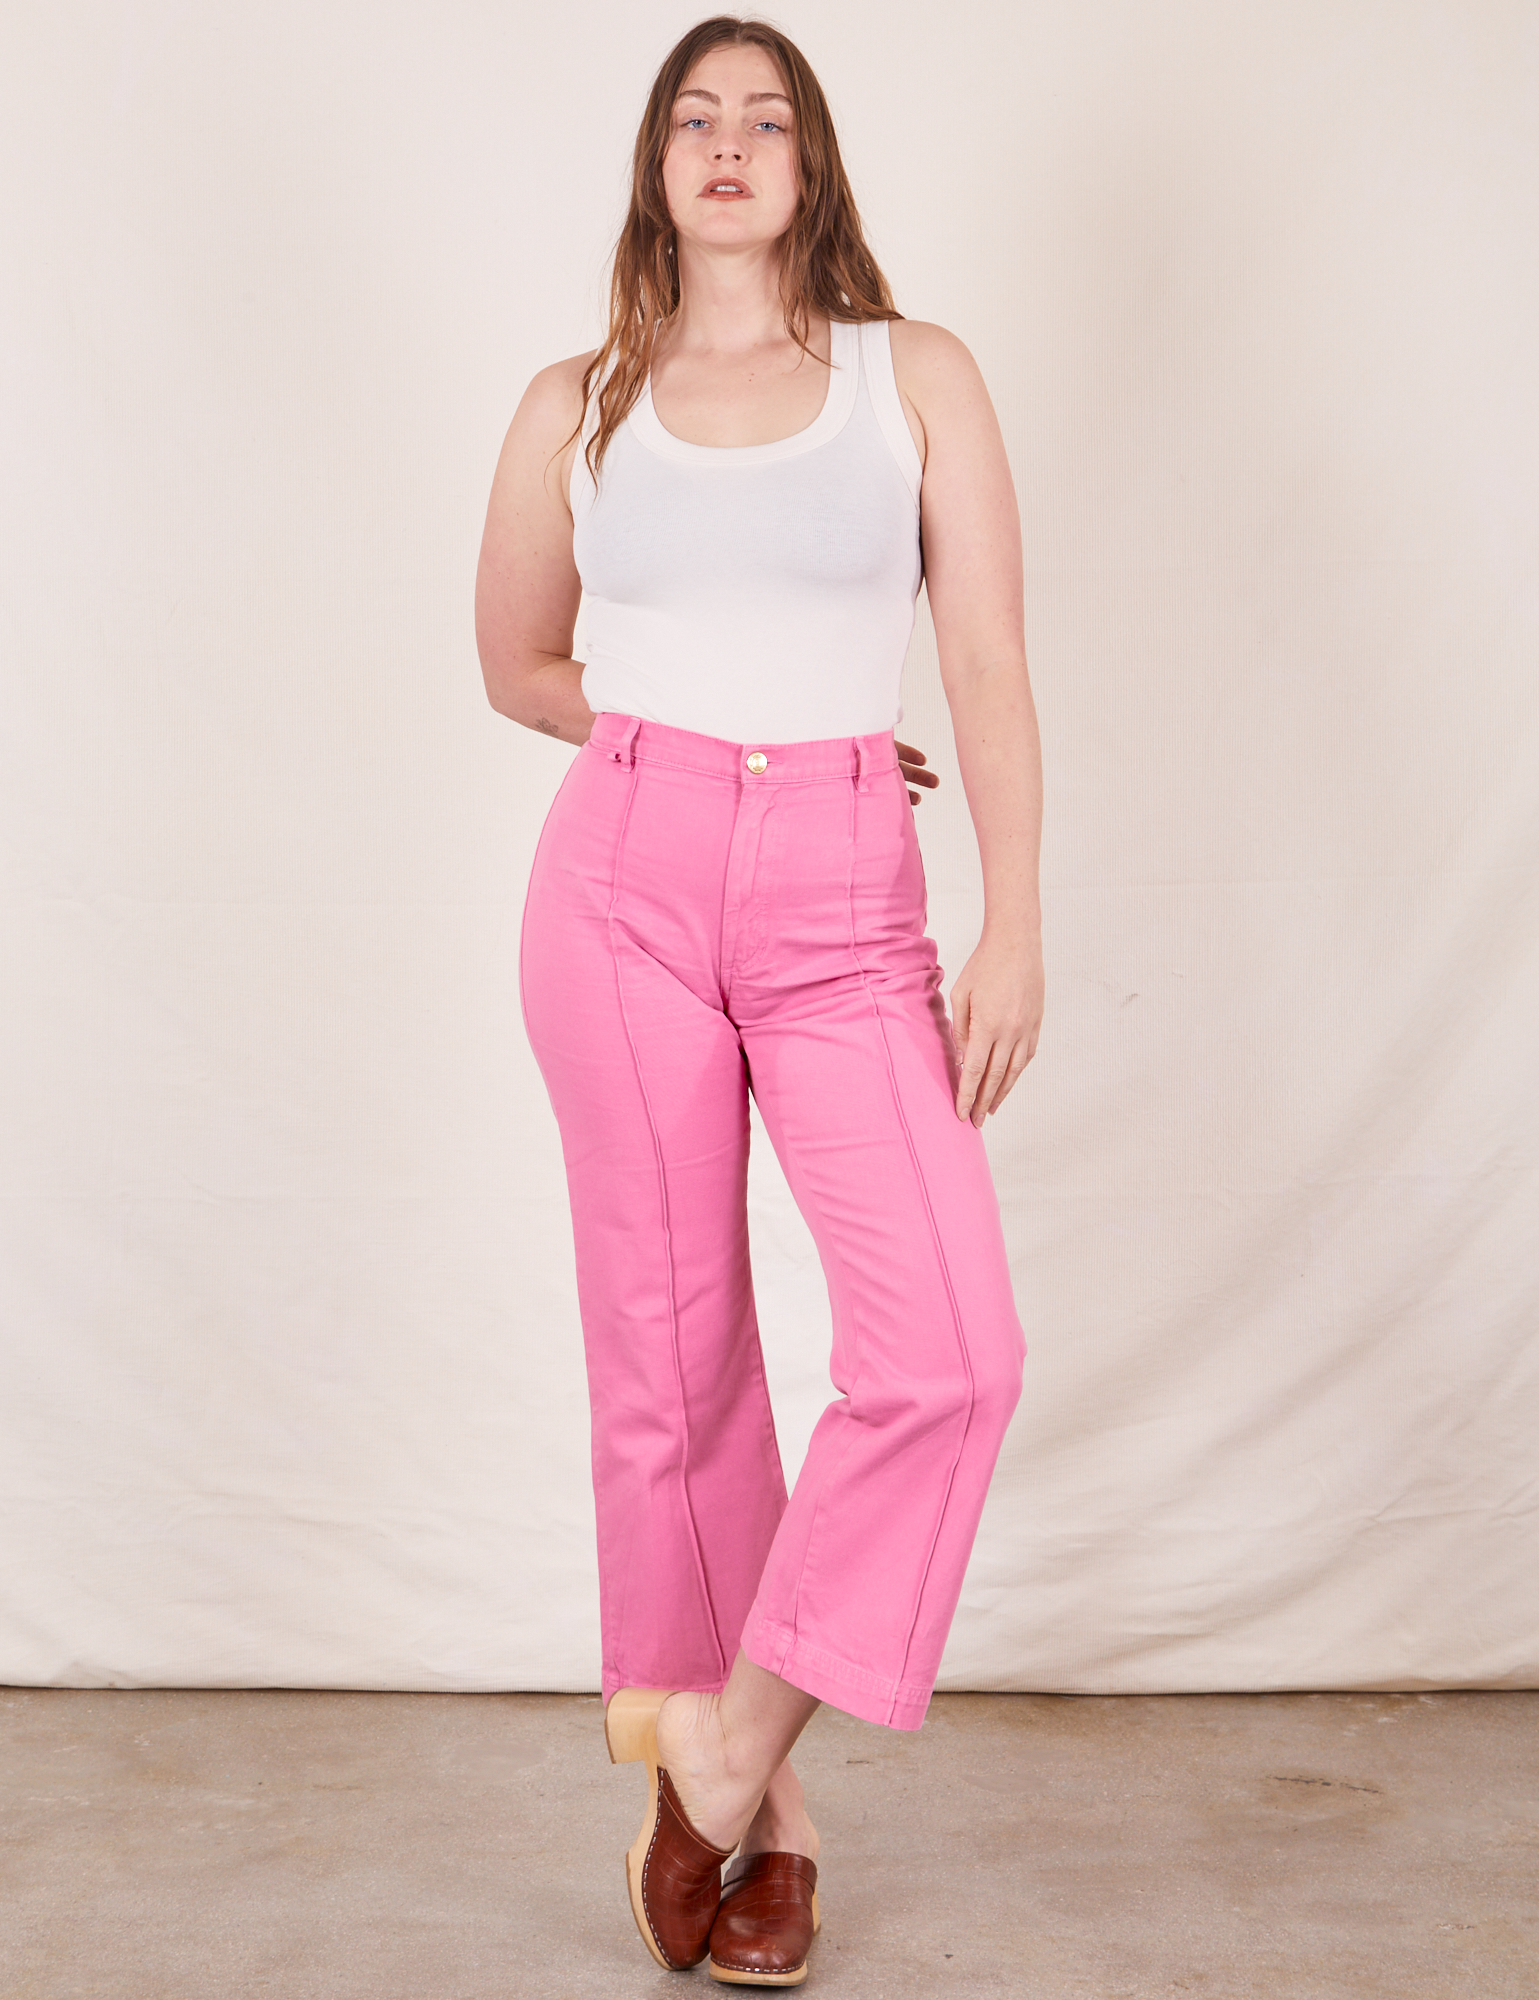 Western Pants in Bubblegum Pink on Allison wearing Tank Top in vintage tee off-white